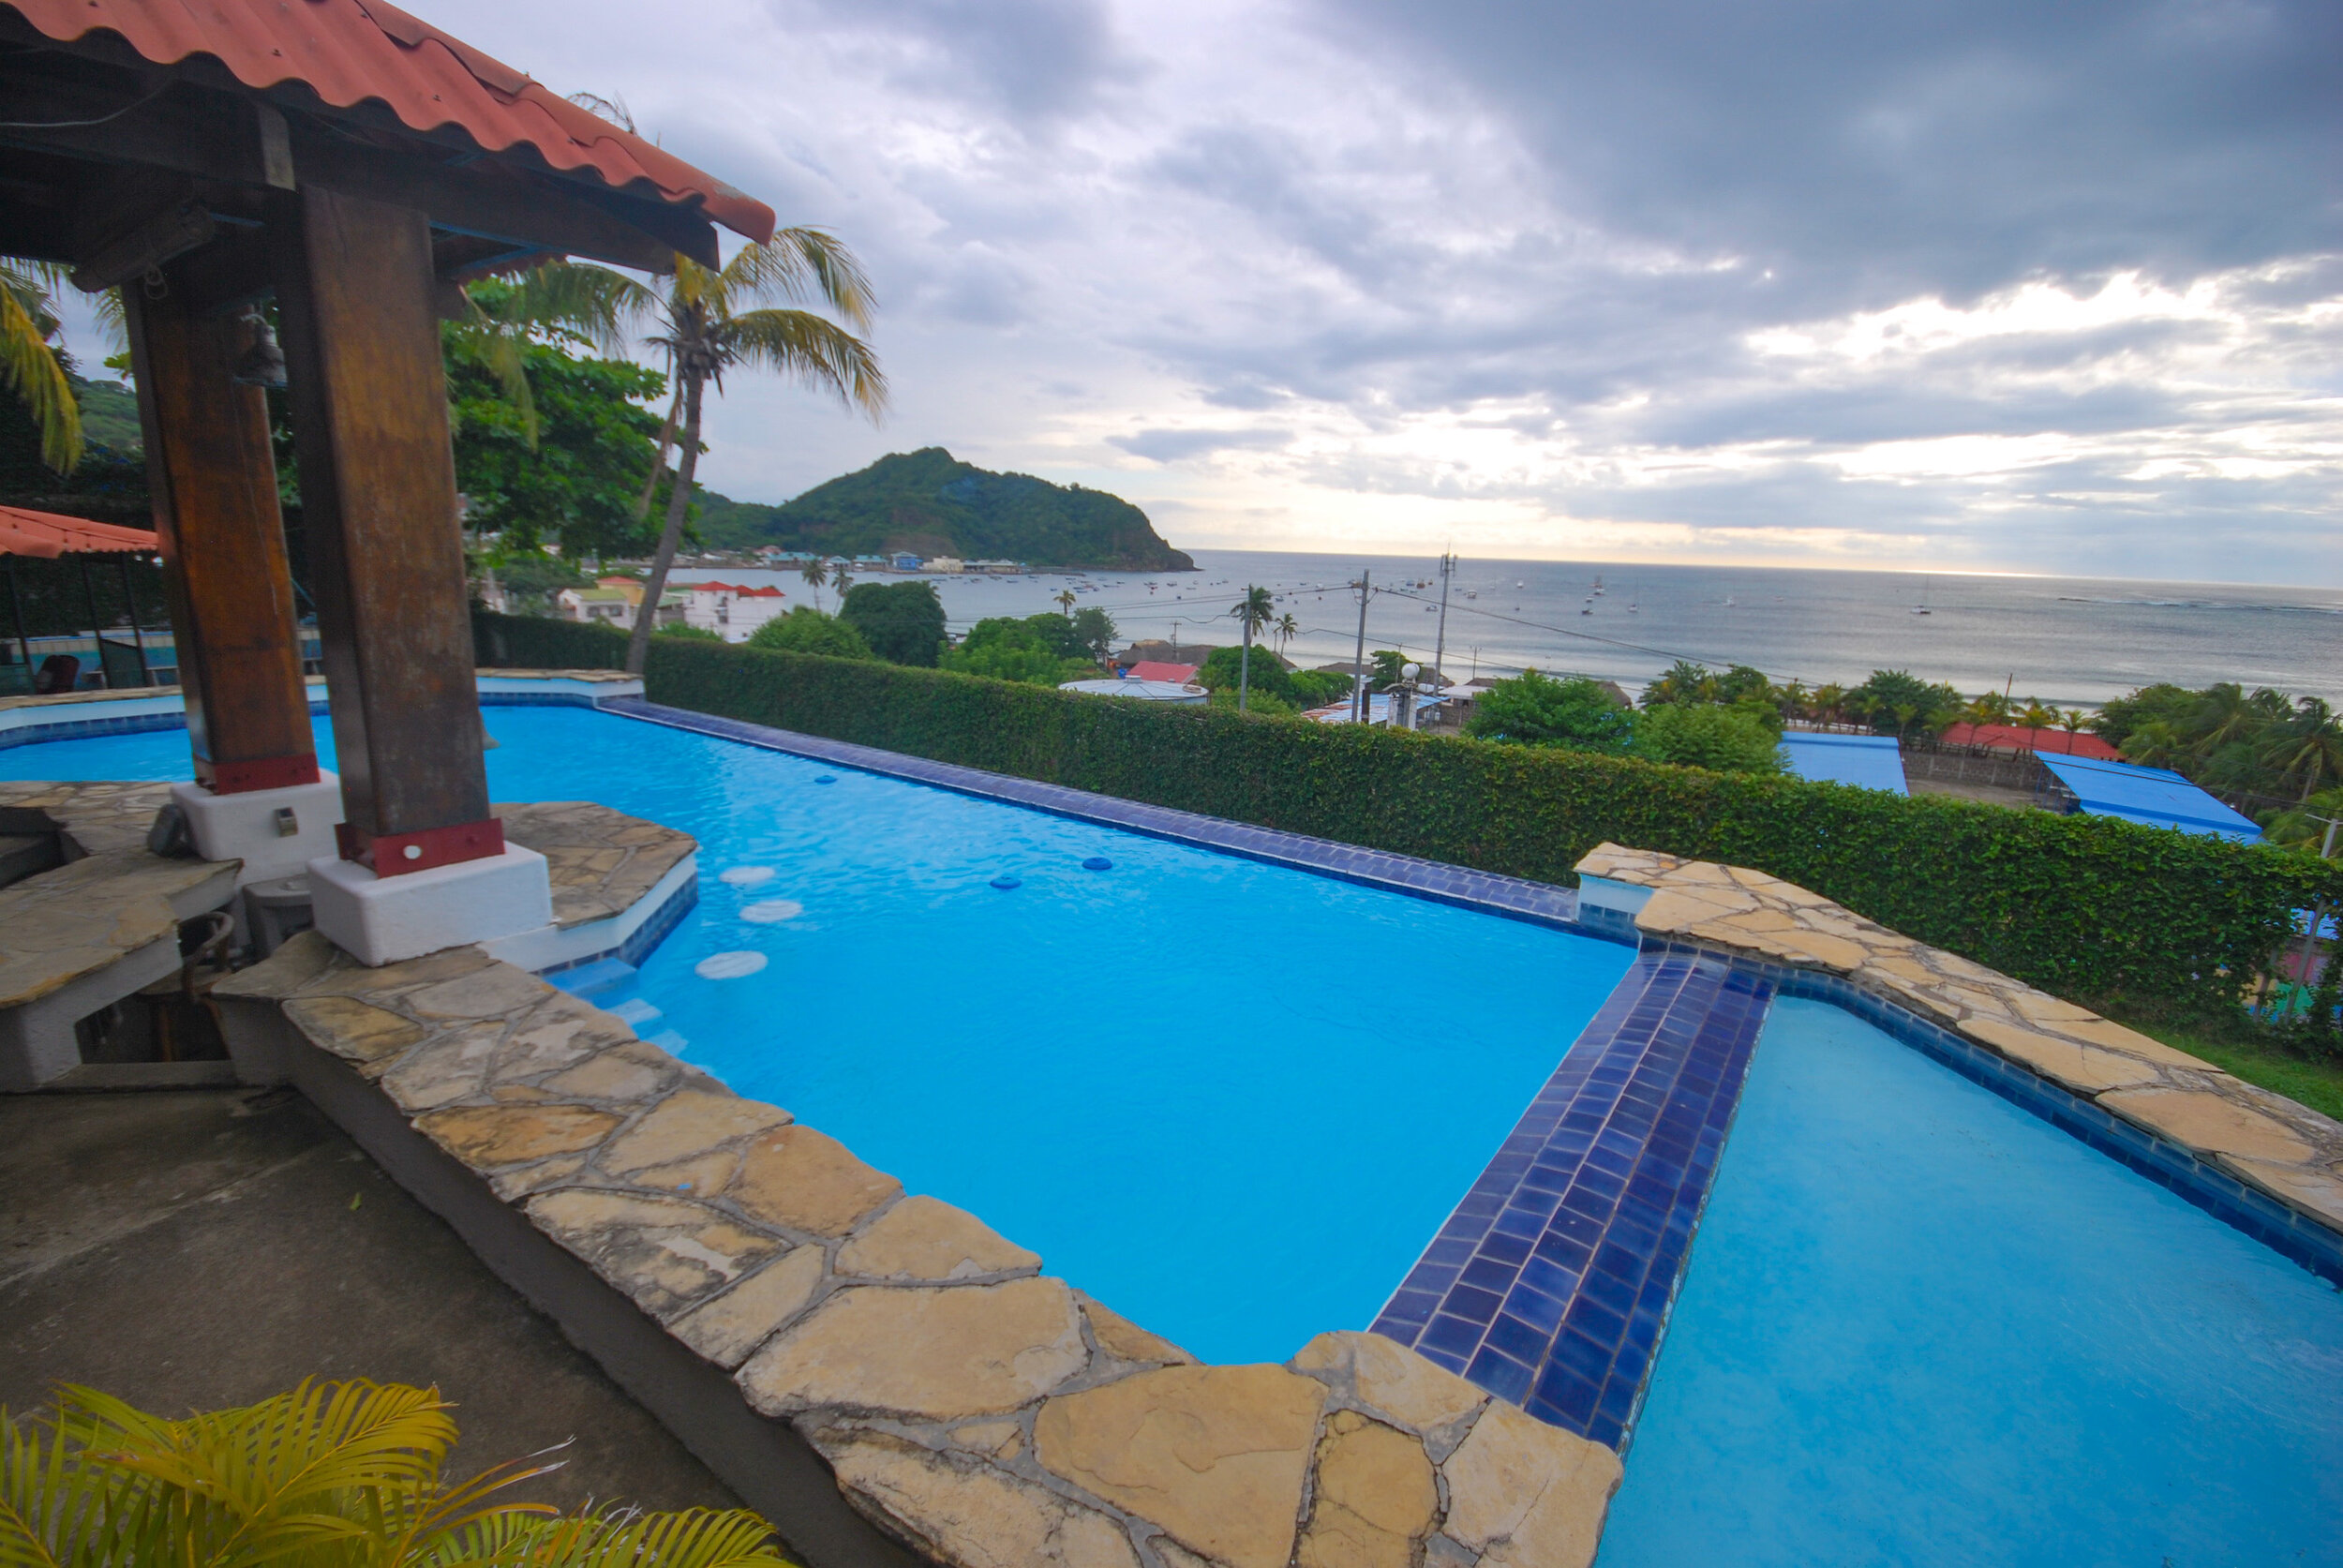 Hotel Resort For Sale San Juan Del Sur Nicaragua 38.JPEG